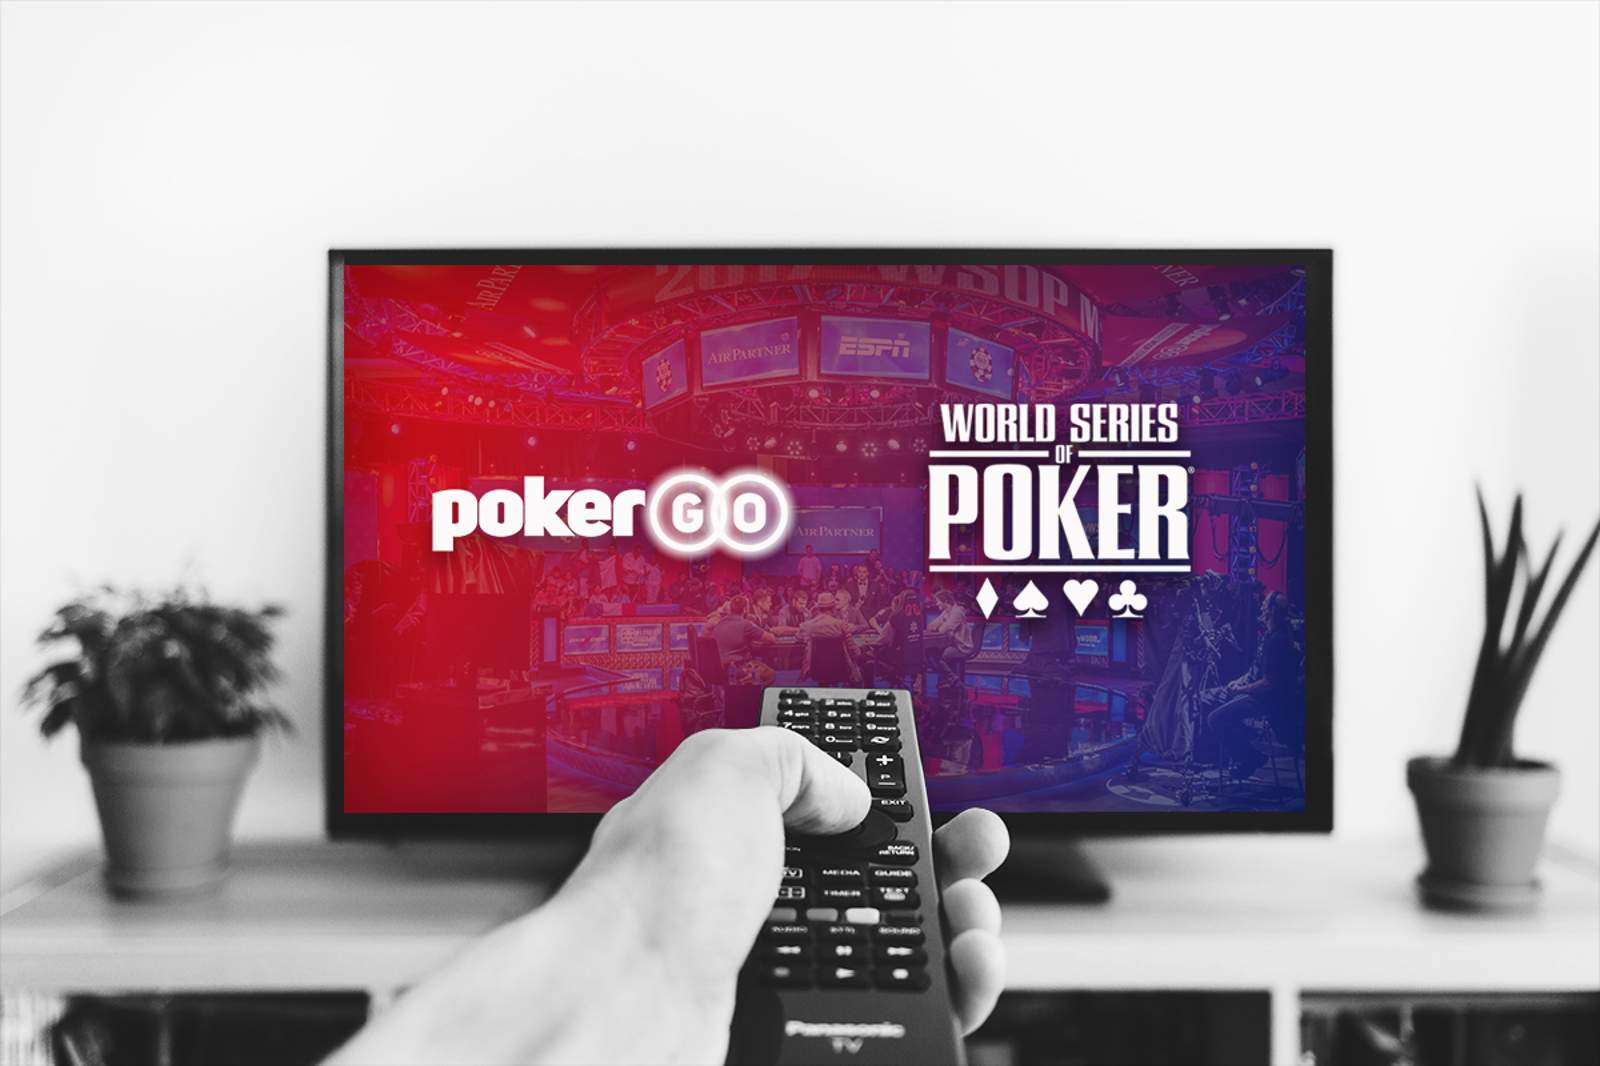 Poker Central Announces 2018 WSOP Live Stream Schedule on PokerGO